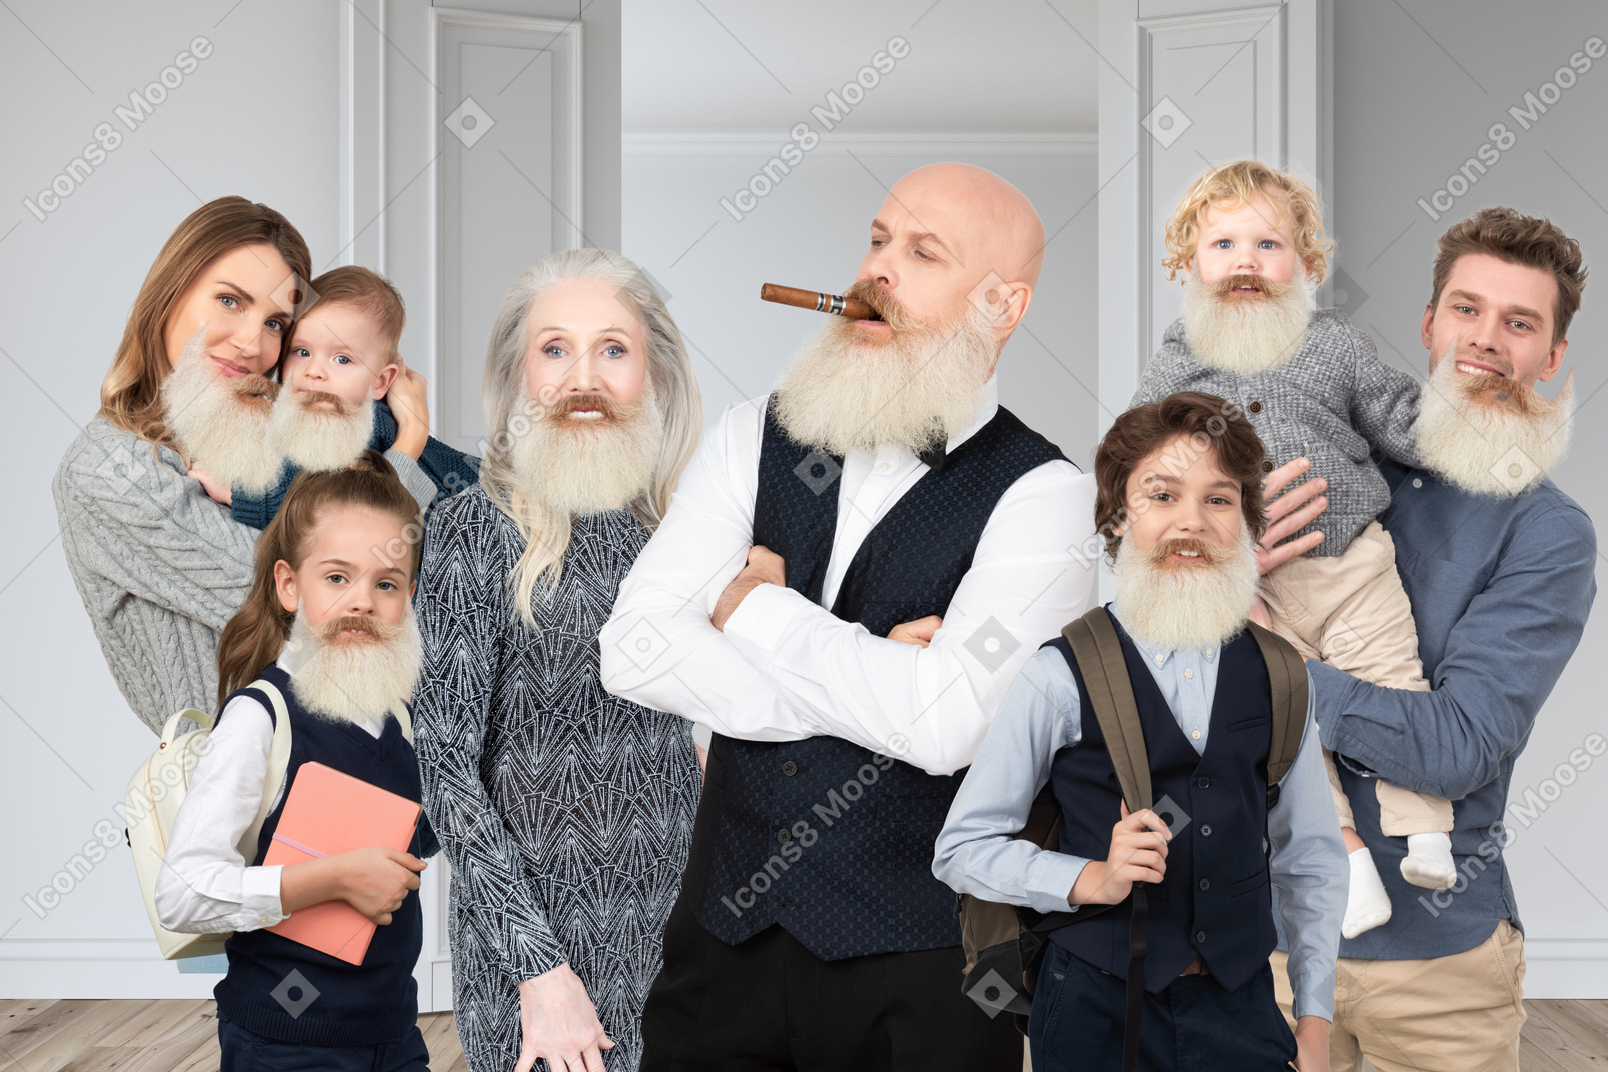 The whole family has a beard!